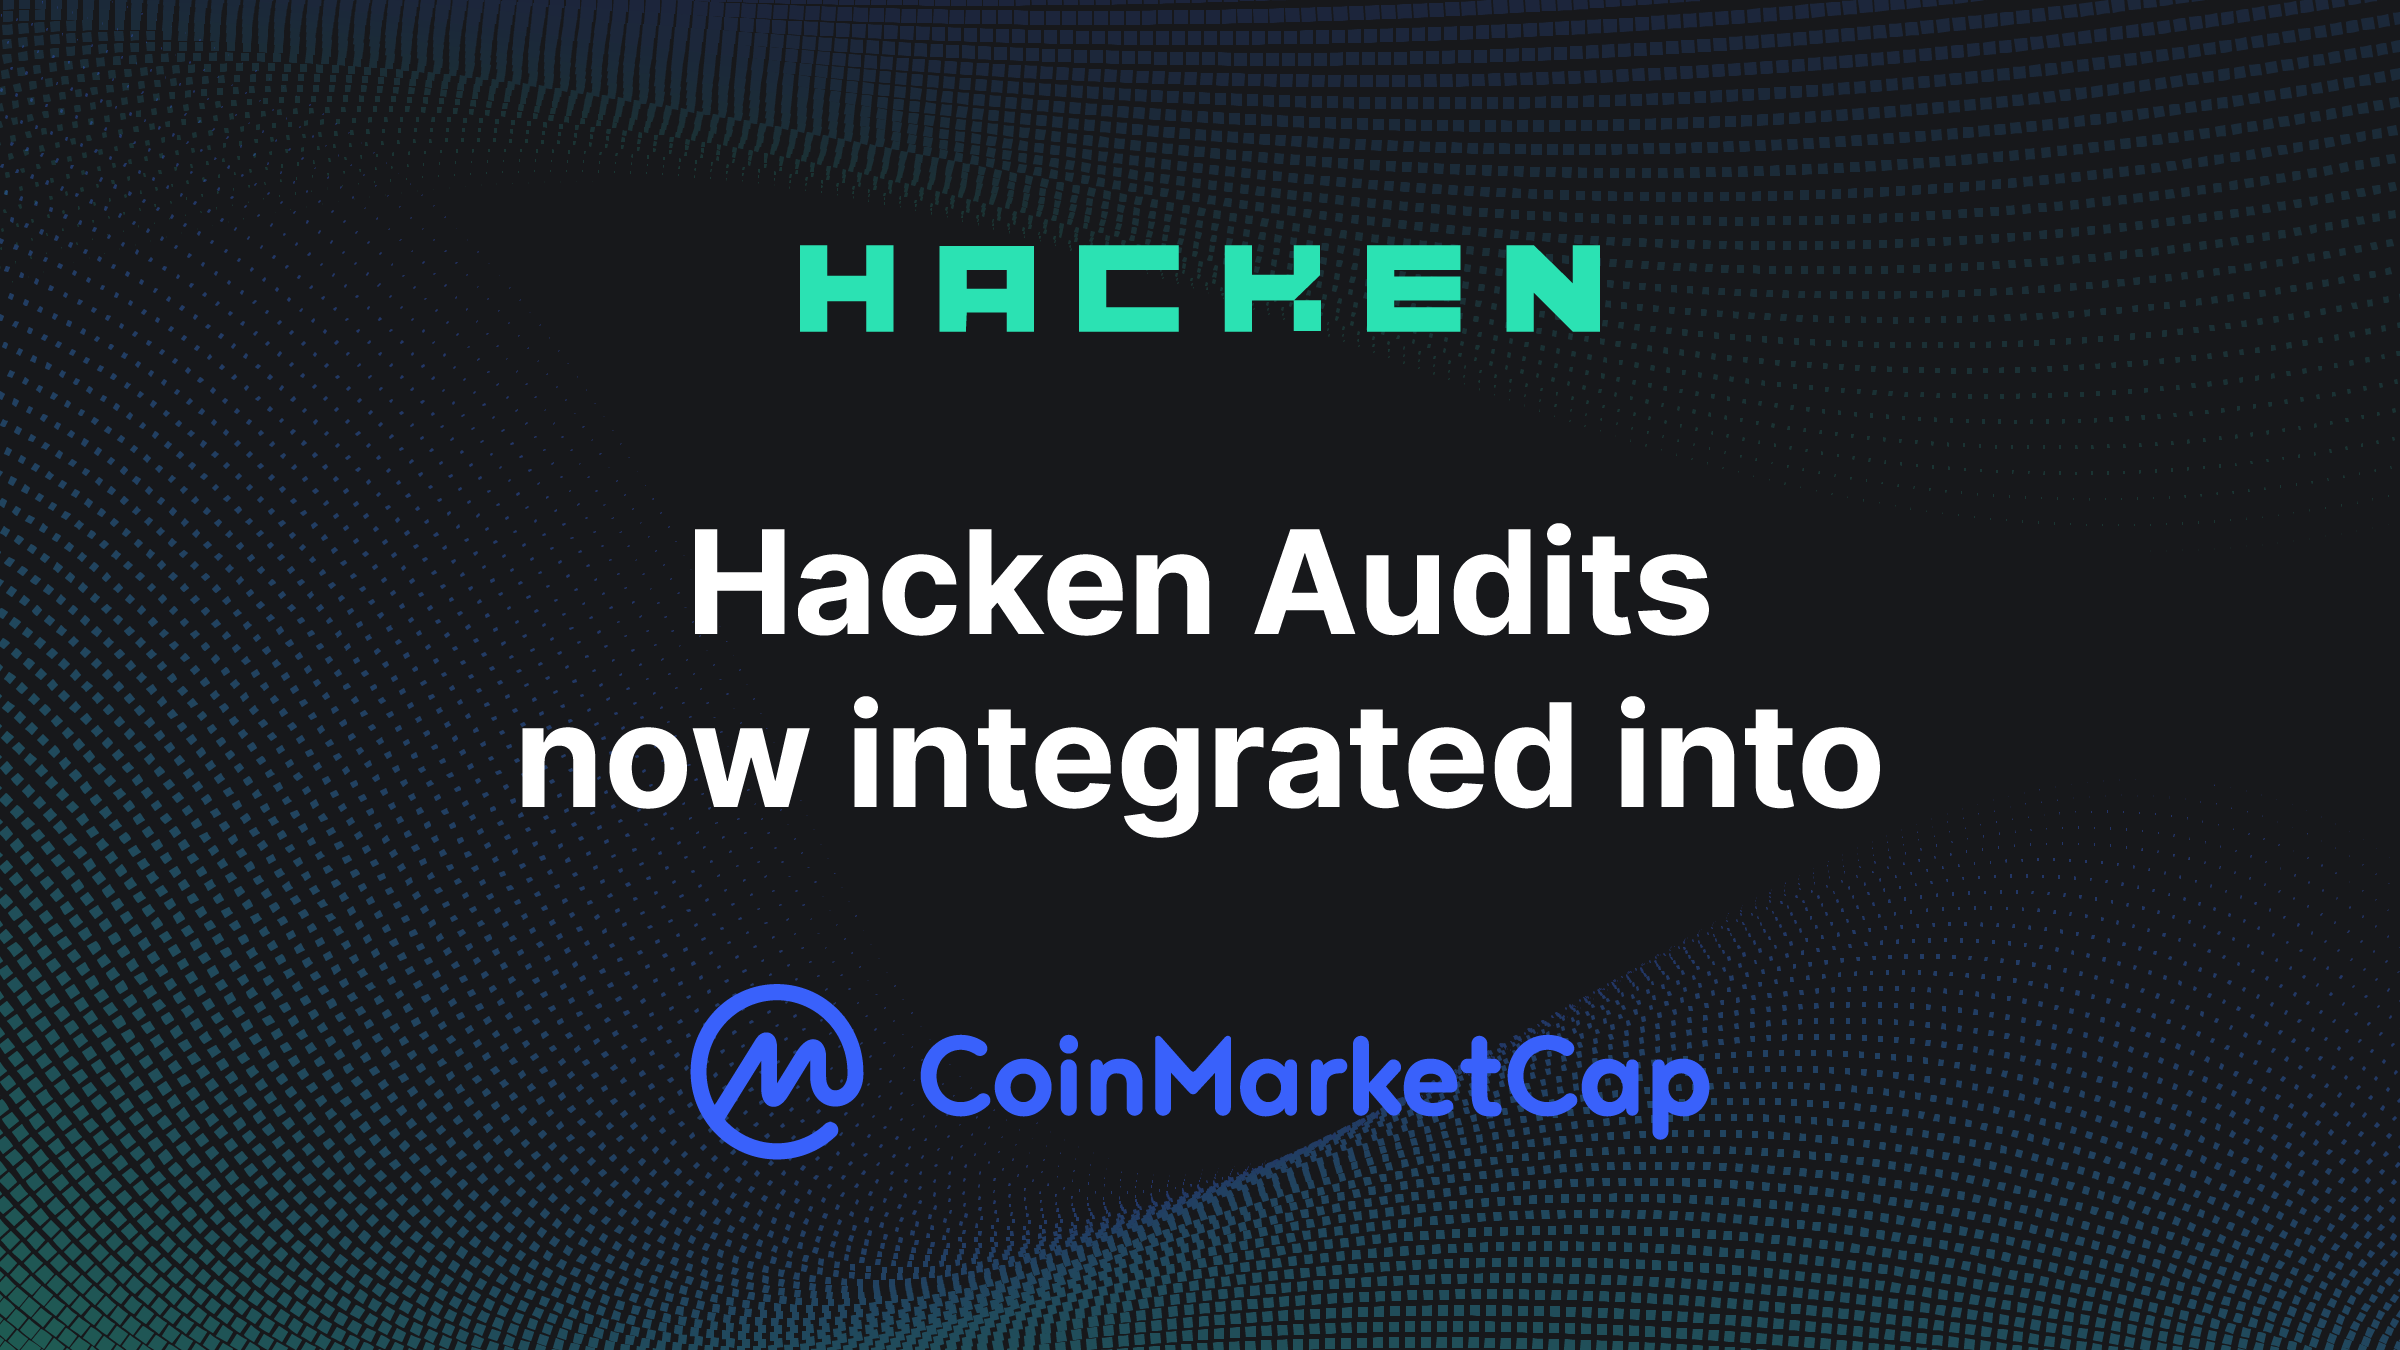 Hacken Audits now integrated into CoinMarketCap